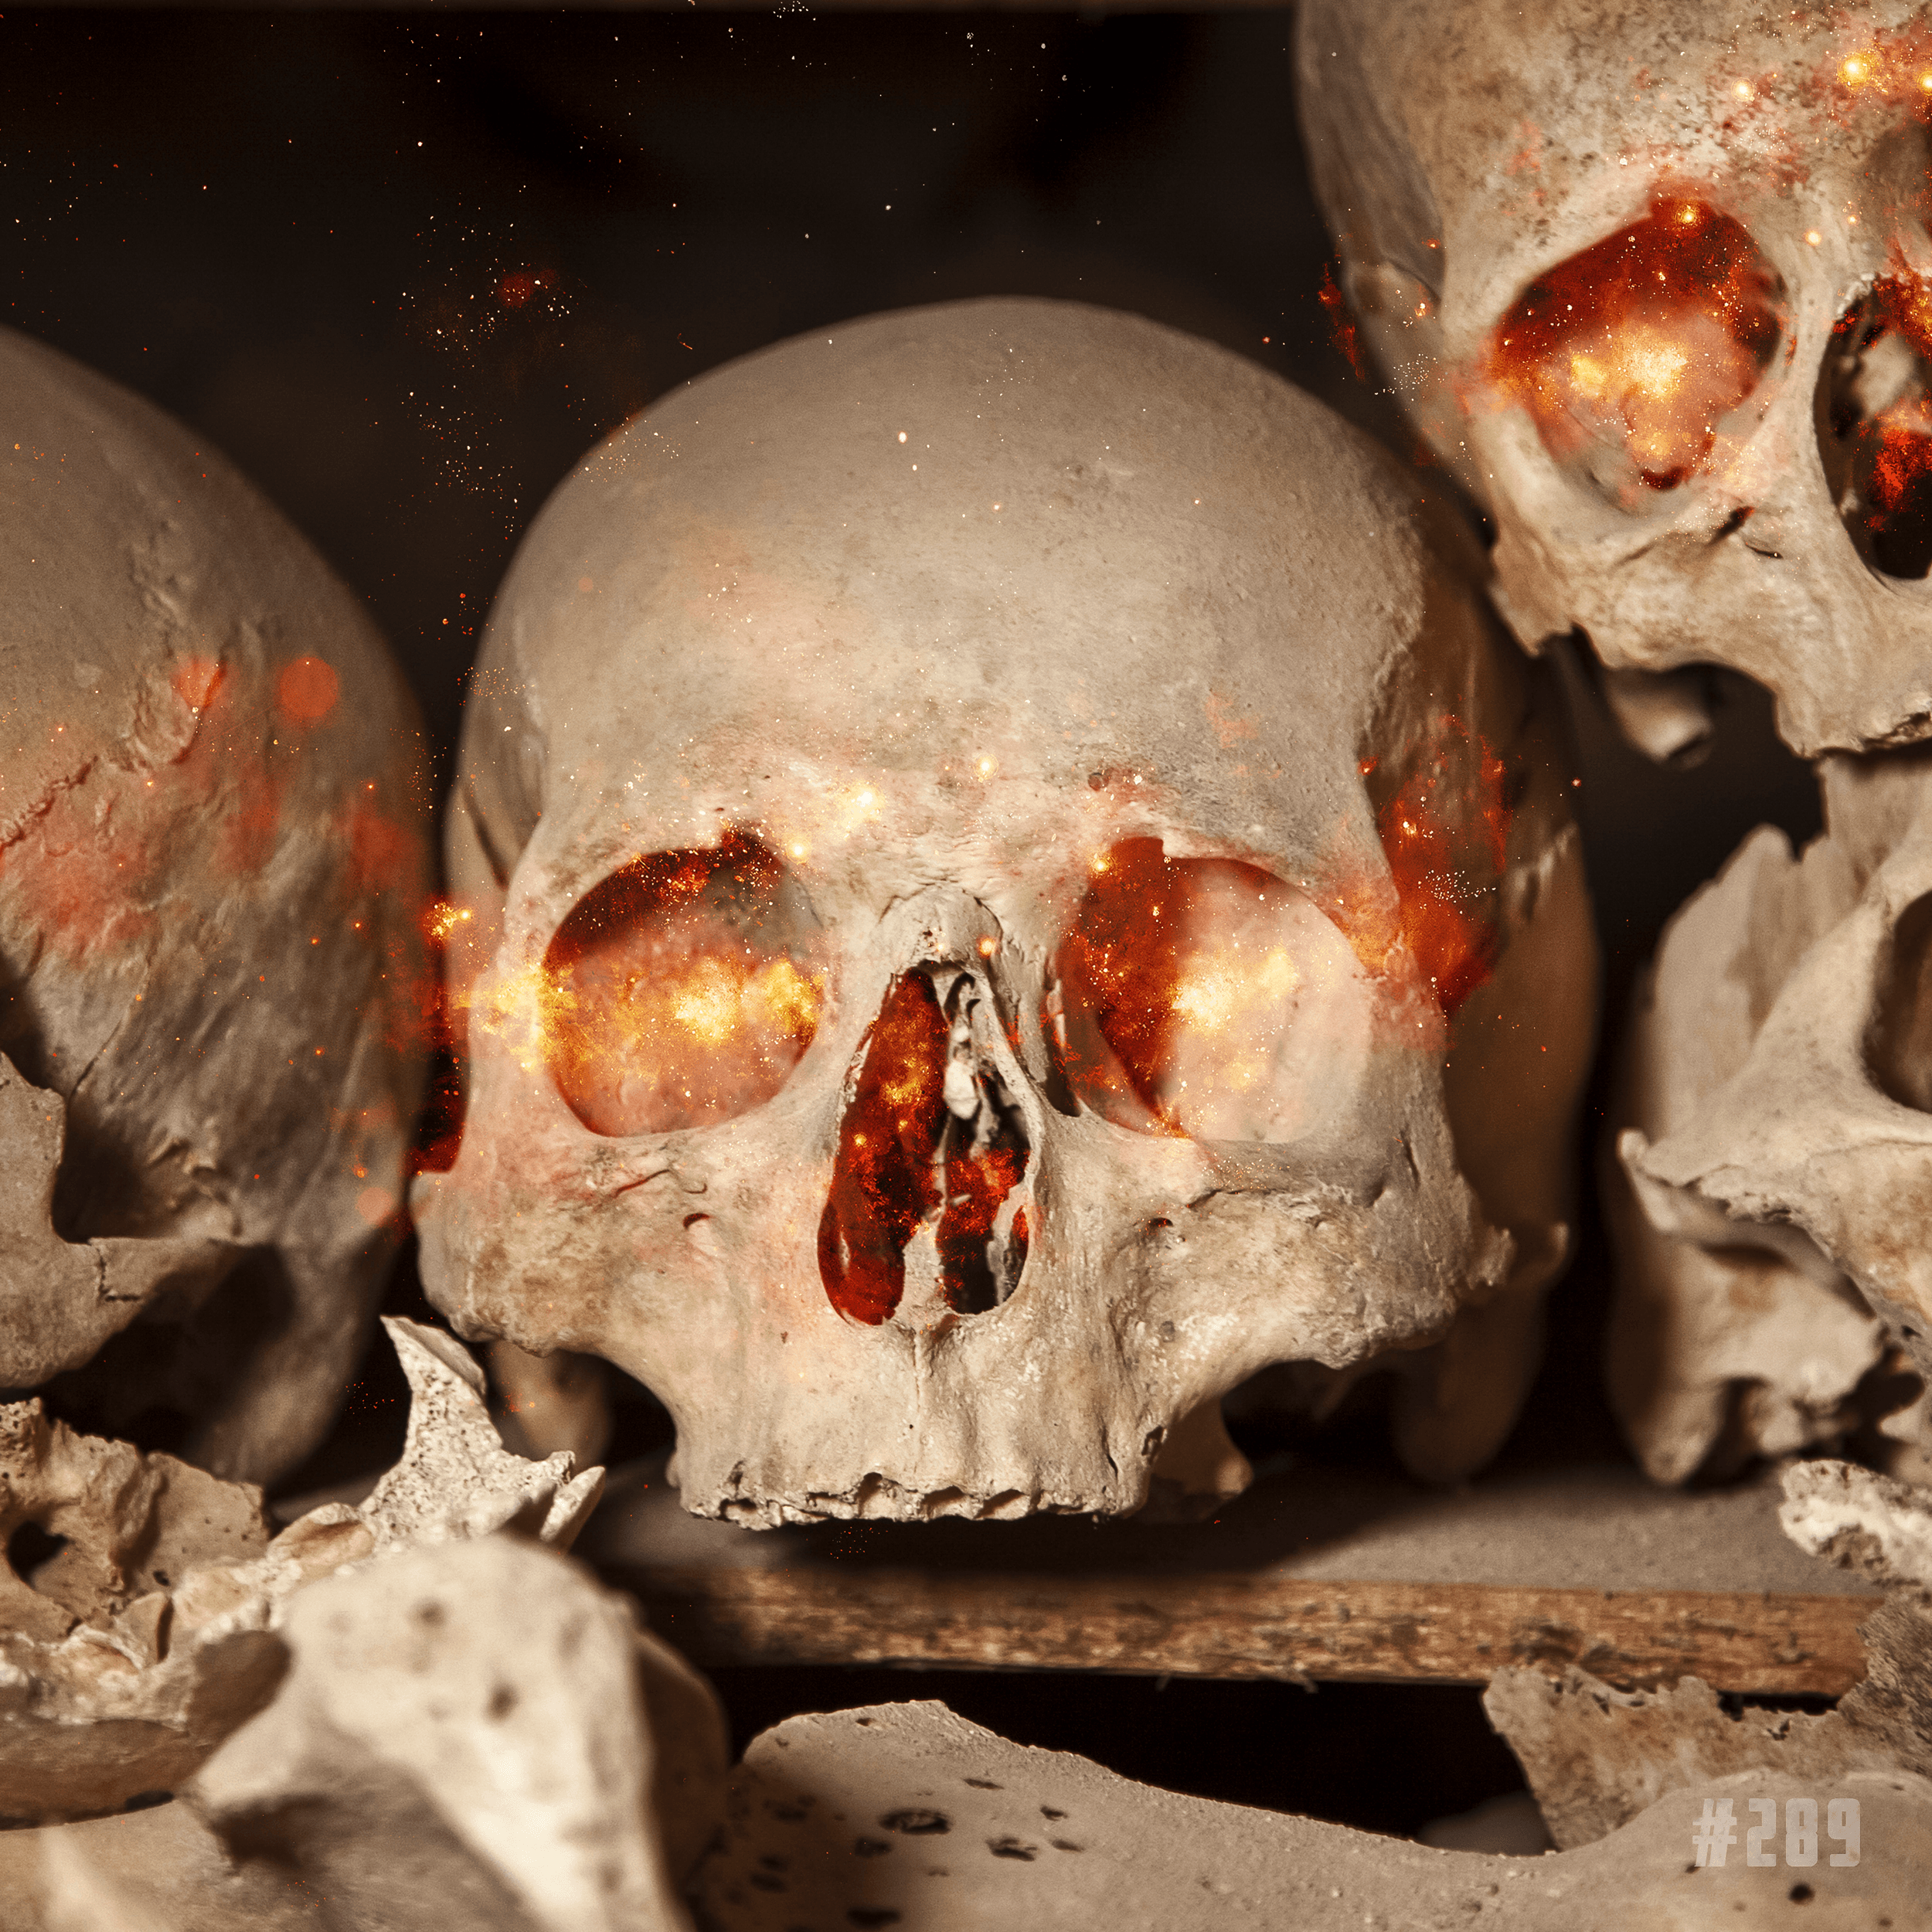 Skulls On ETH #289